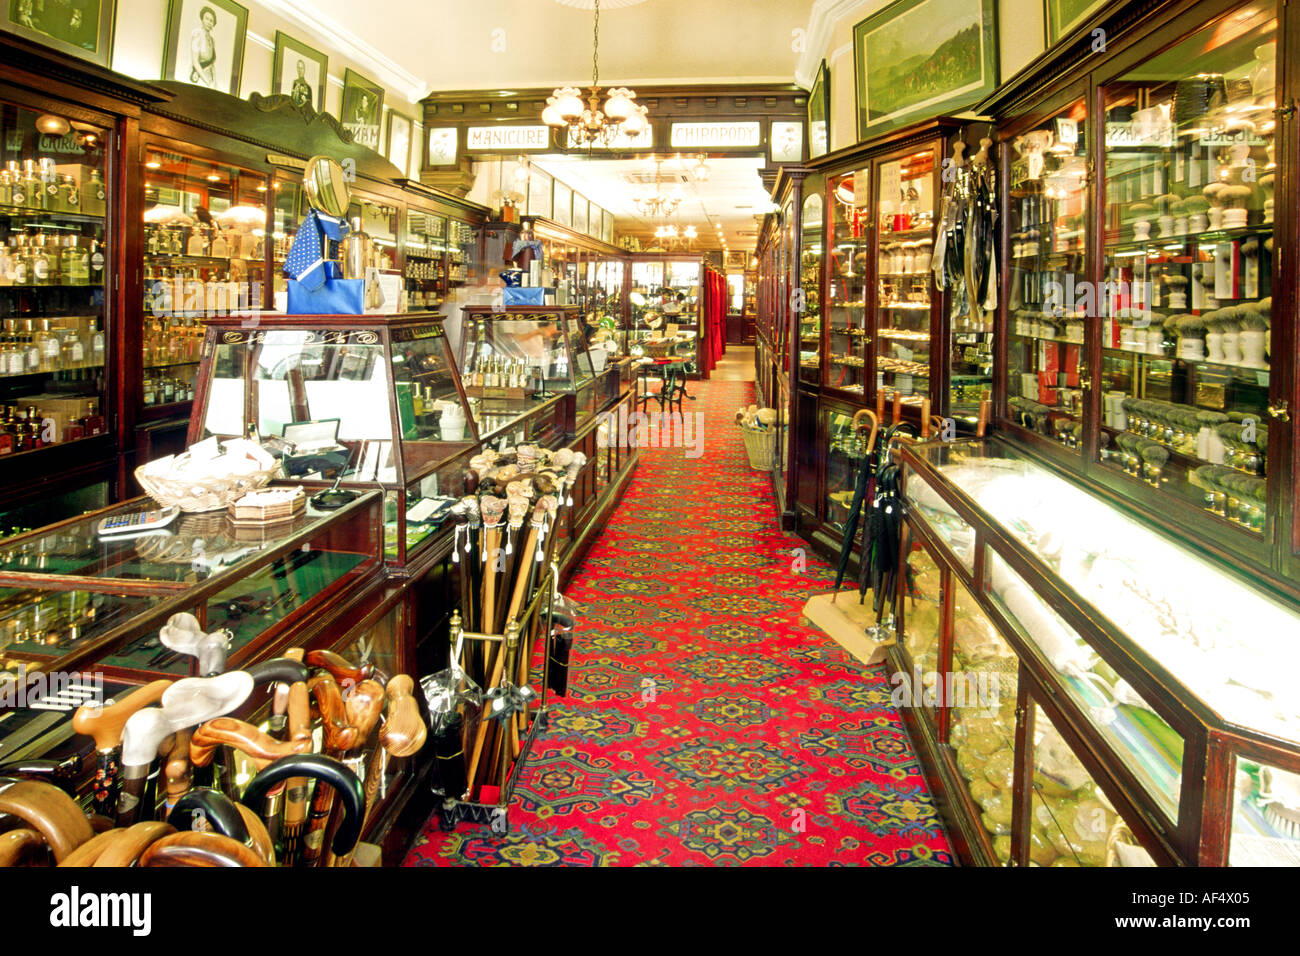 The interior of the Victorian-era George Trumper barber's shop in London. Stock Photo